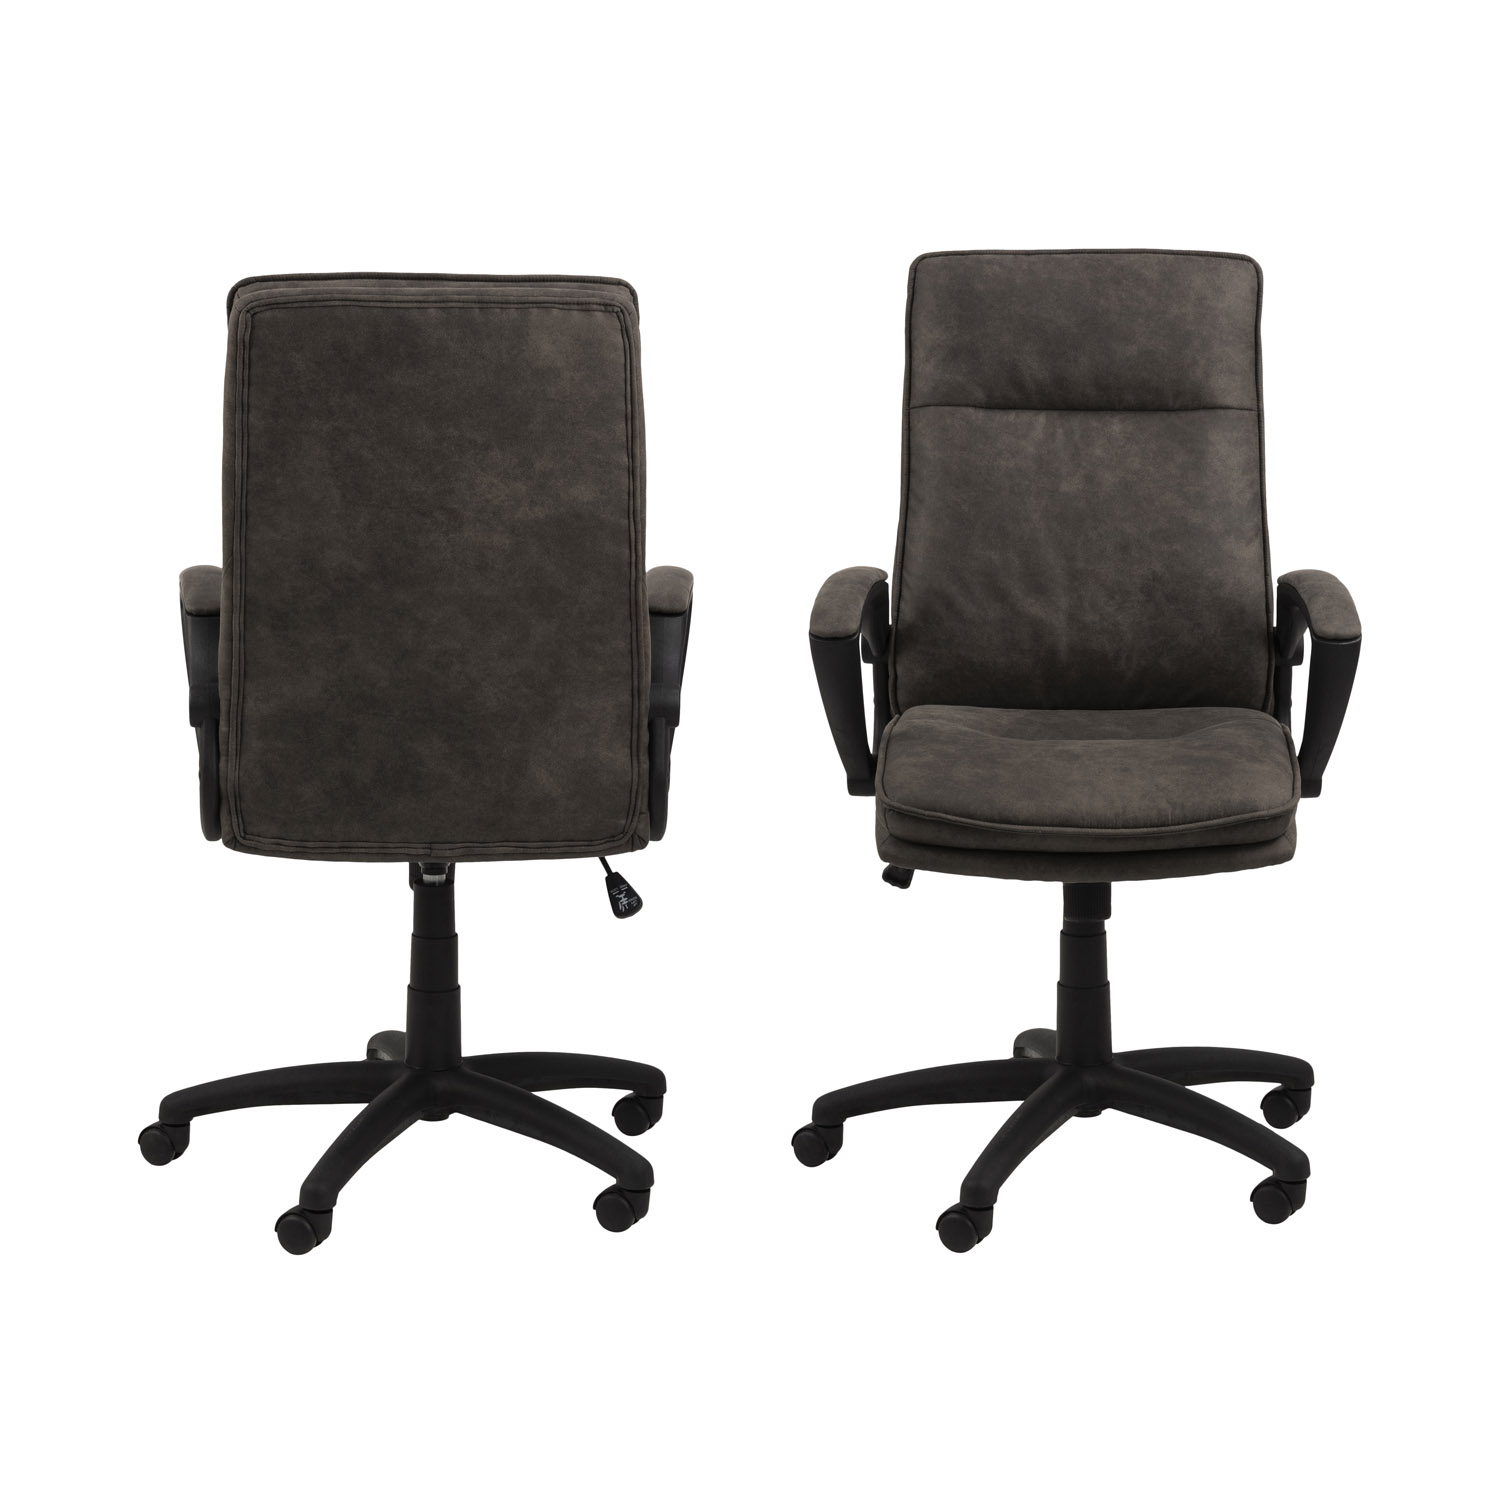 ACT NORDIC Brad skrivebordsstol m. armlæn og hjul - antracitgrå stof og sort nylon